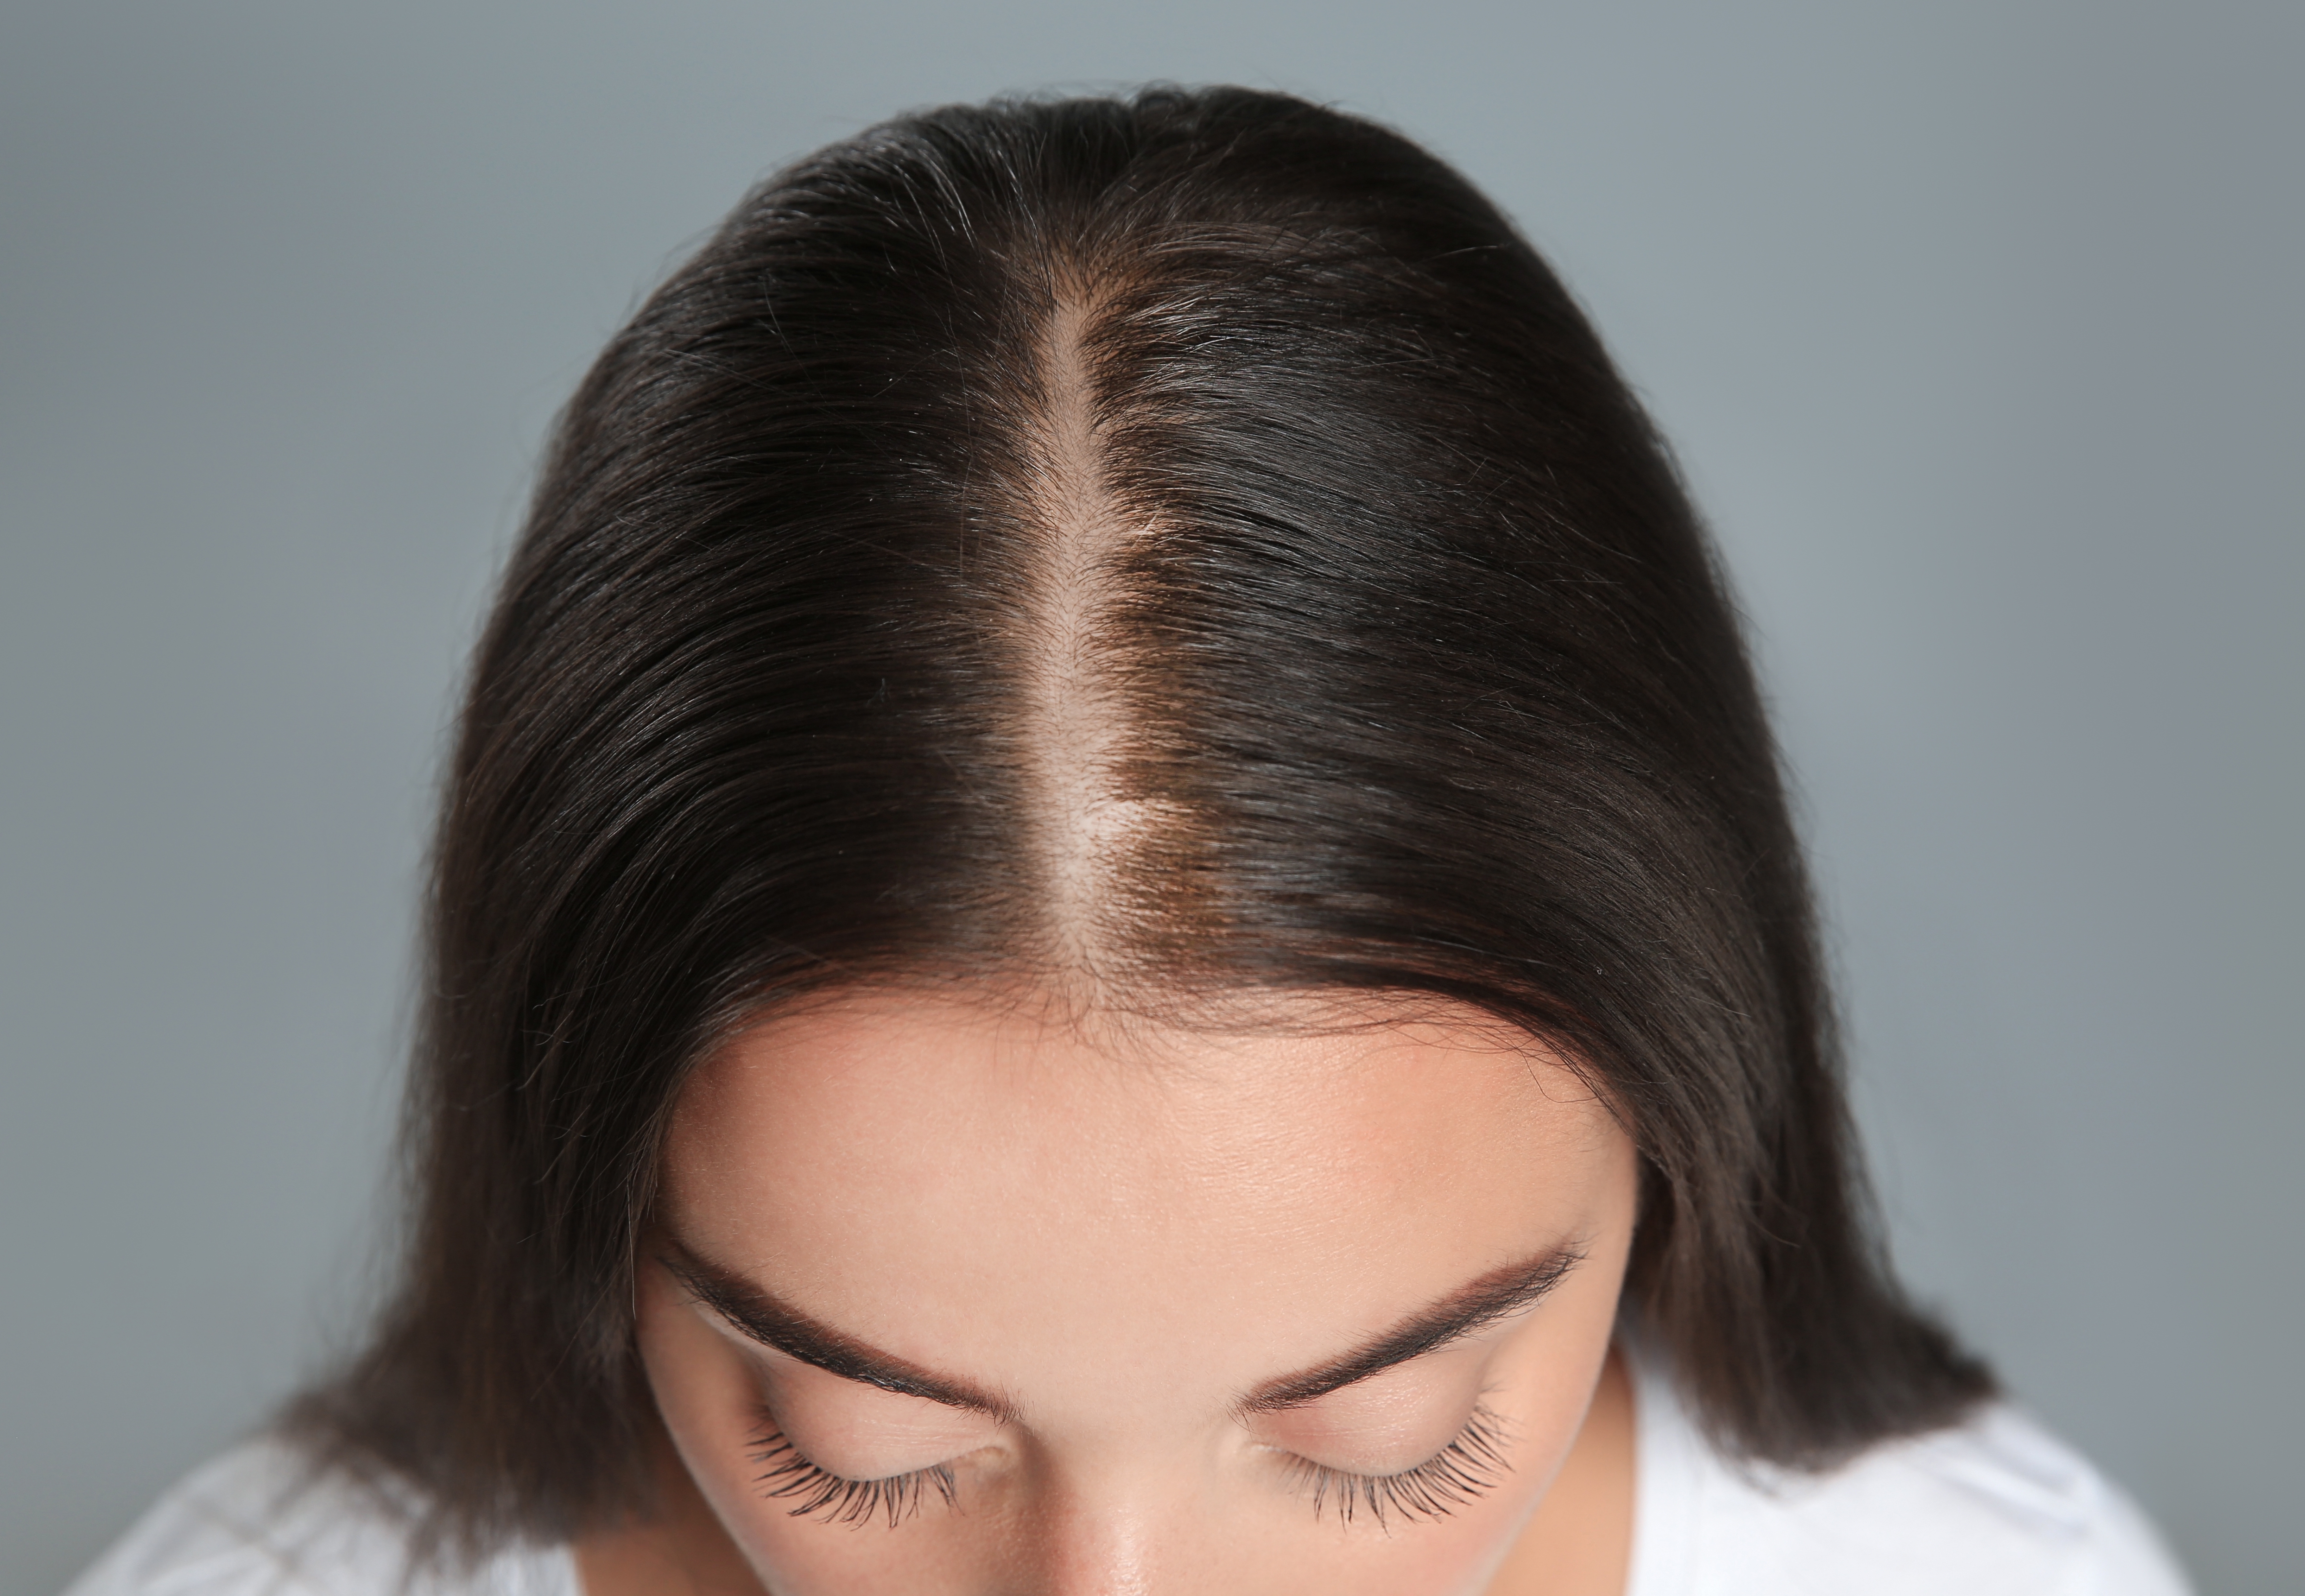 Alopecia and sudden hair loss - McDowell's Herbal Treatments